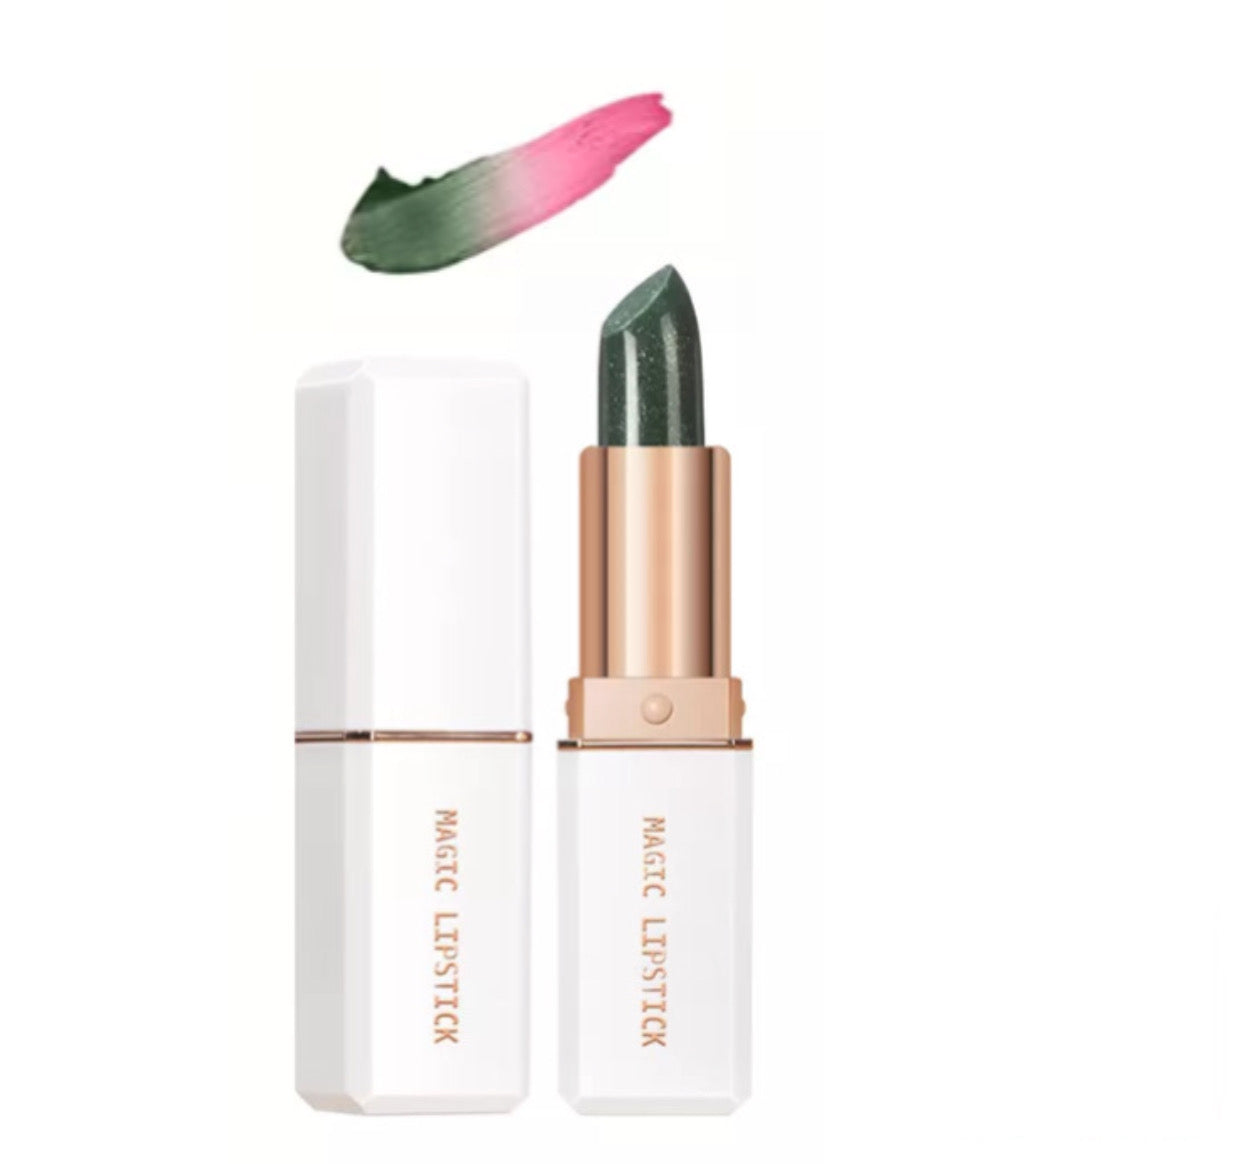 green-rose lipstick [ change colour ]